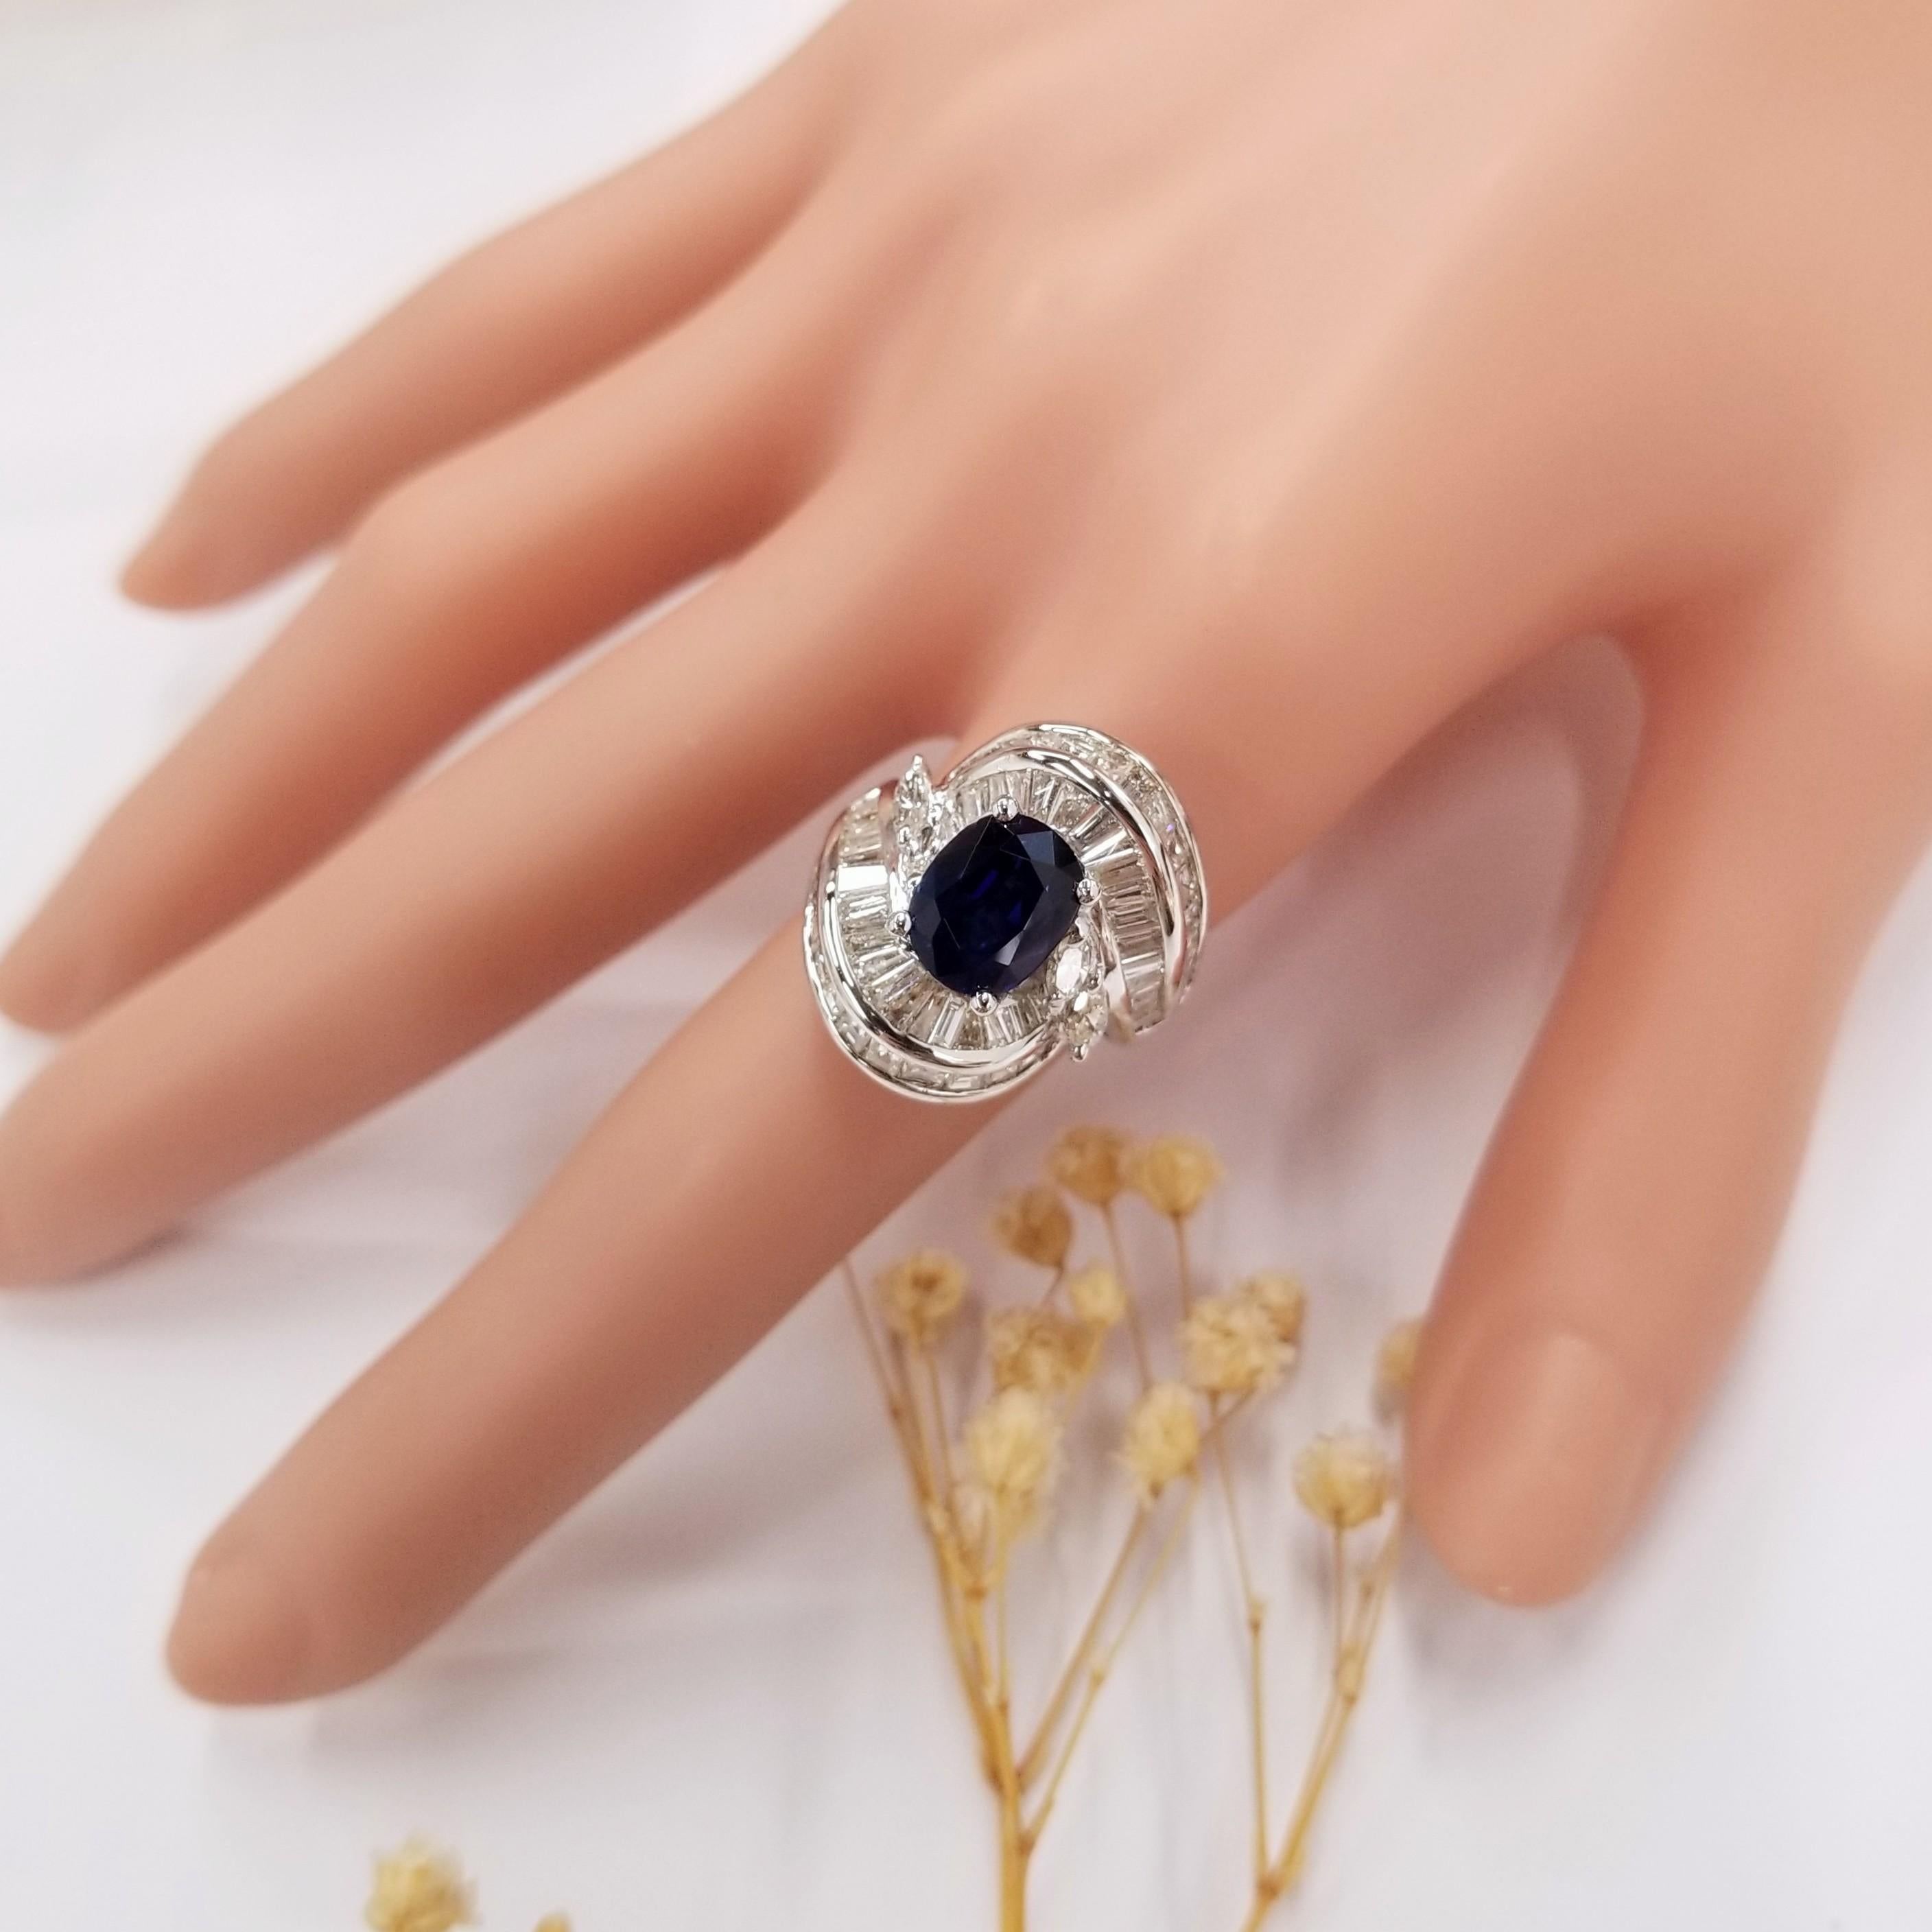 IGI Certified 2.78Carat Blue Sapphire & Diamond Ring in 18K White Gold For Sale 2